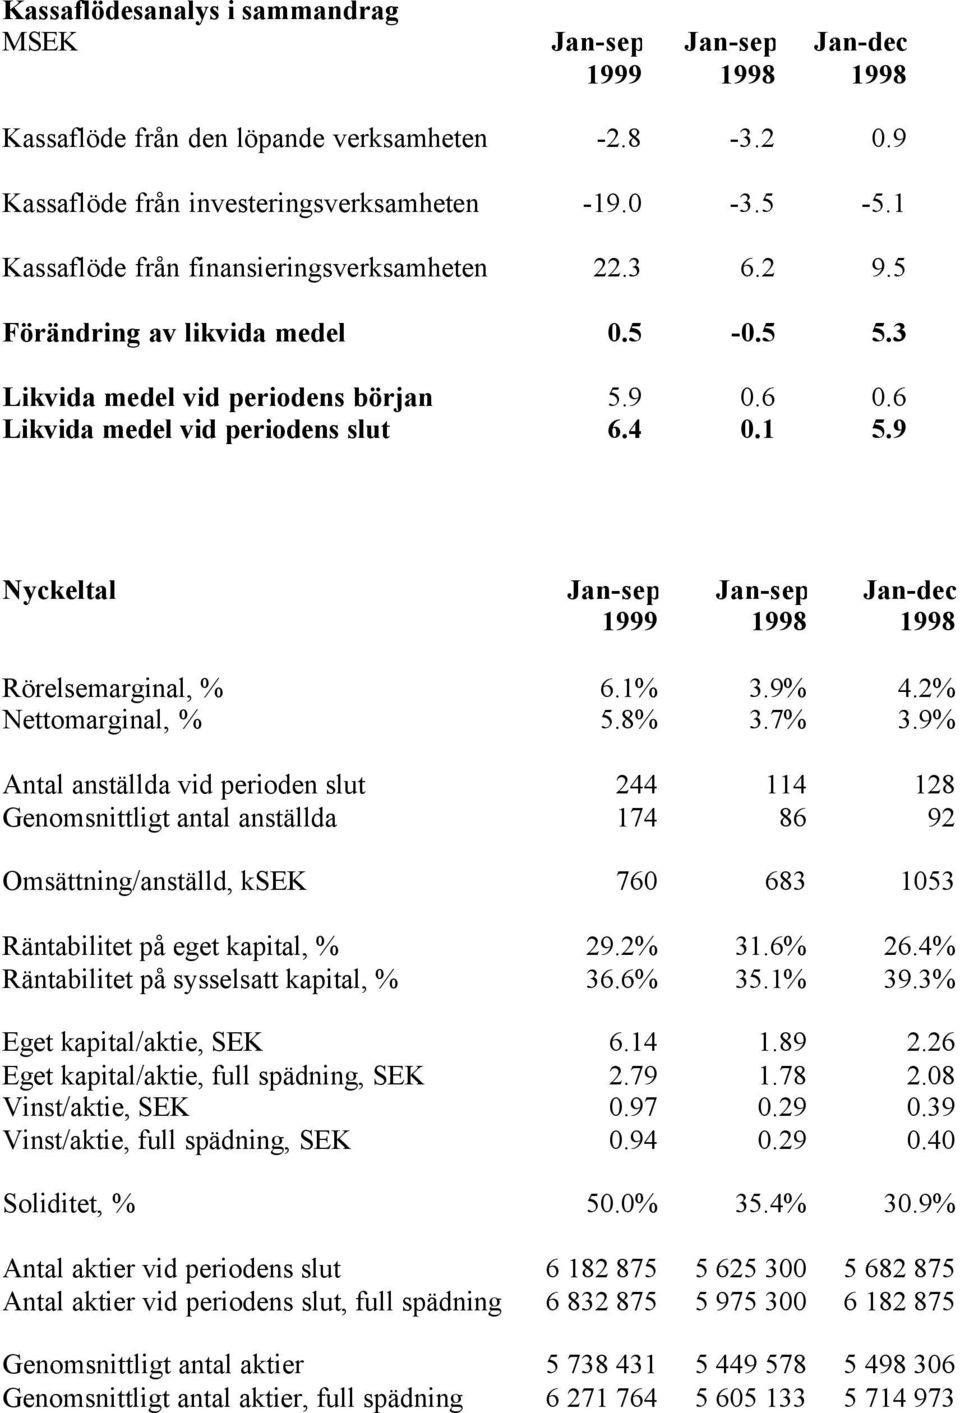 9 Nyckeltal Jan-sep Jan-sep Jan-dec 1999 1998 1998 Rörelsemarginal, % 6.1% 3.9% 4.2% Nettomarginal, % 5.8% 3.7% 3.